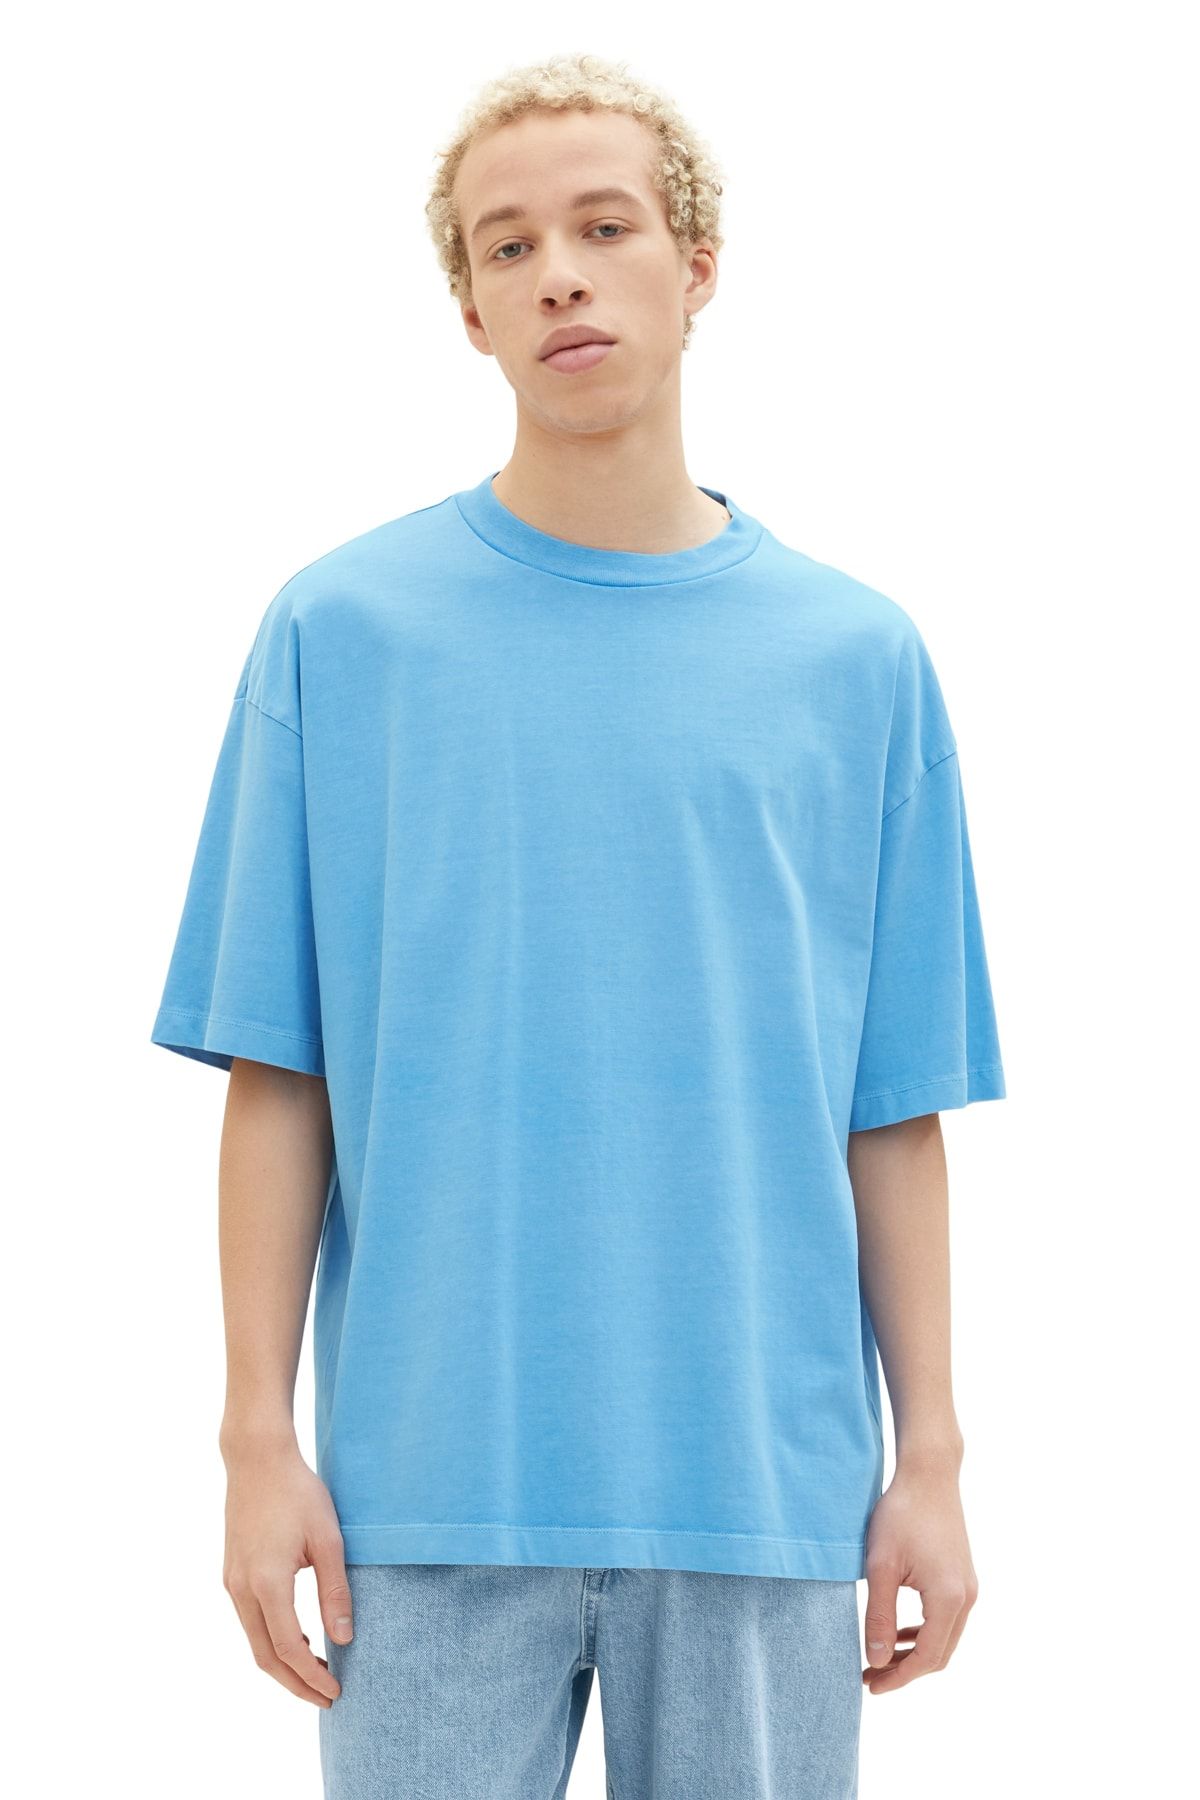 preismanagement Tom Tailor Denim Men\'s rainy T-Shirt - Trendyol blue sky